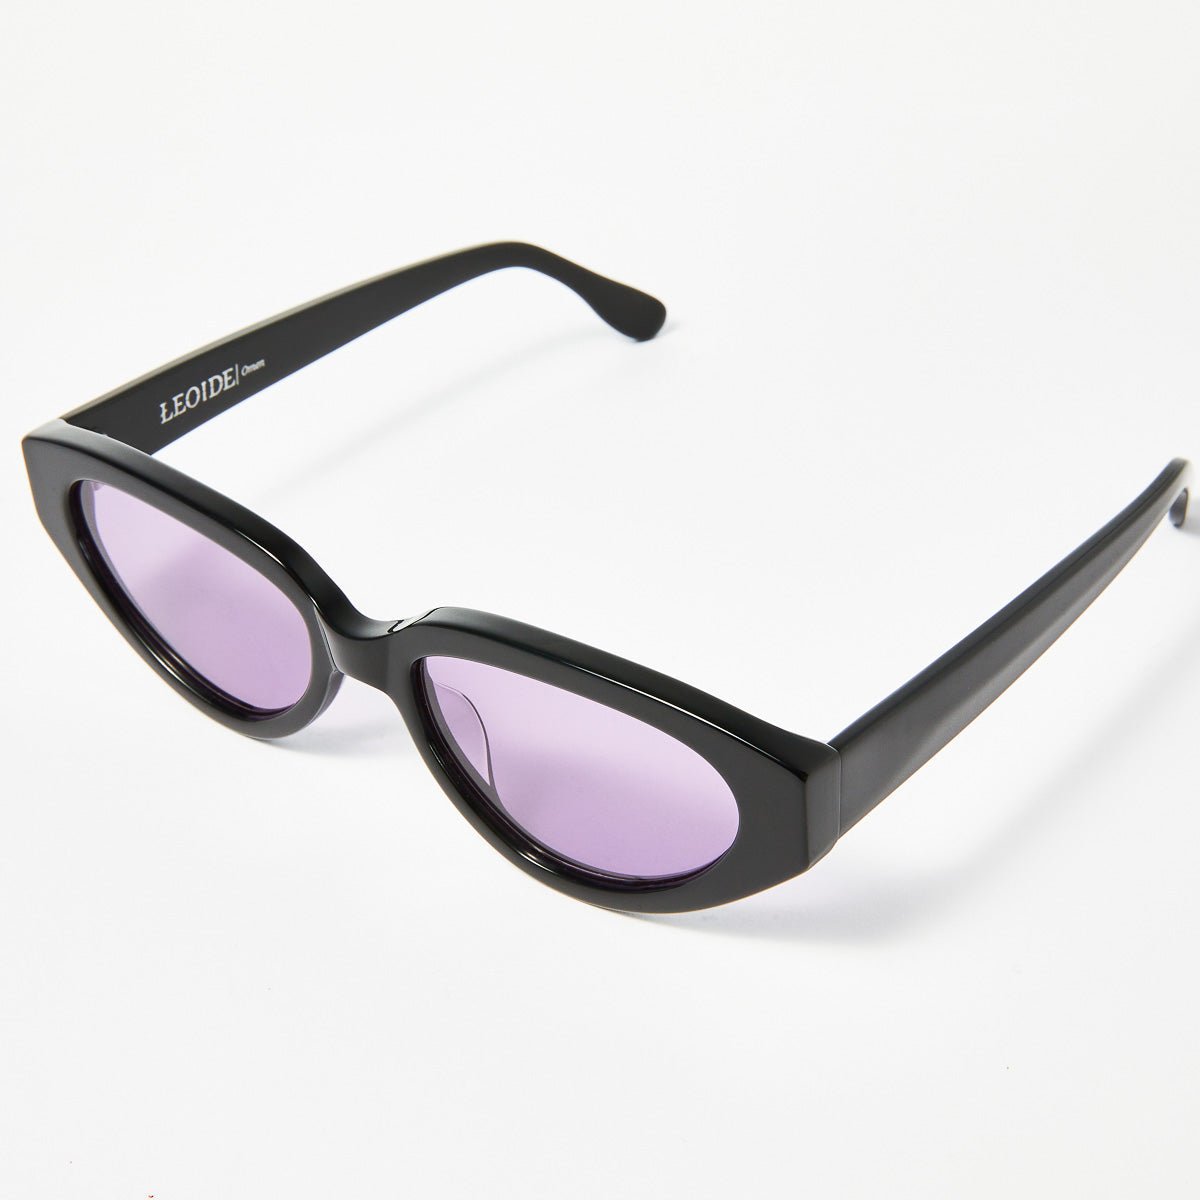 OMEN - Black Frames / Purple Lens ŁEOIDE